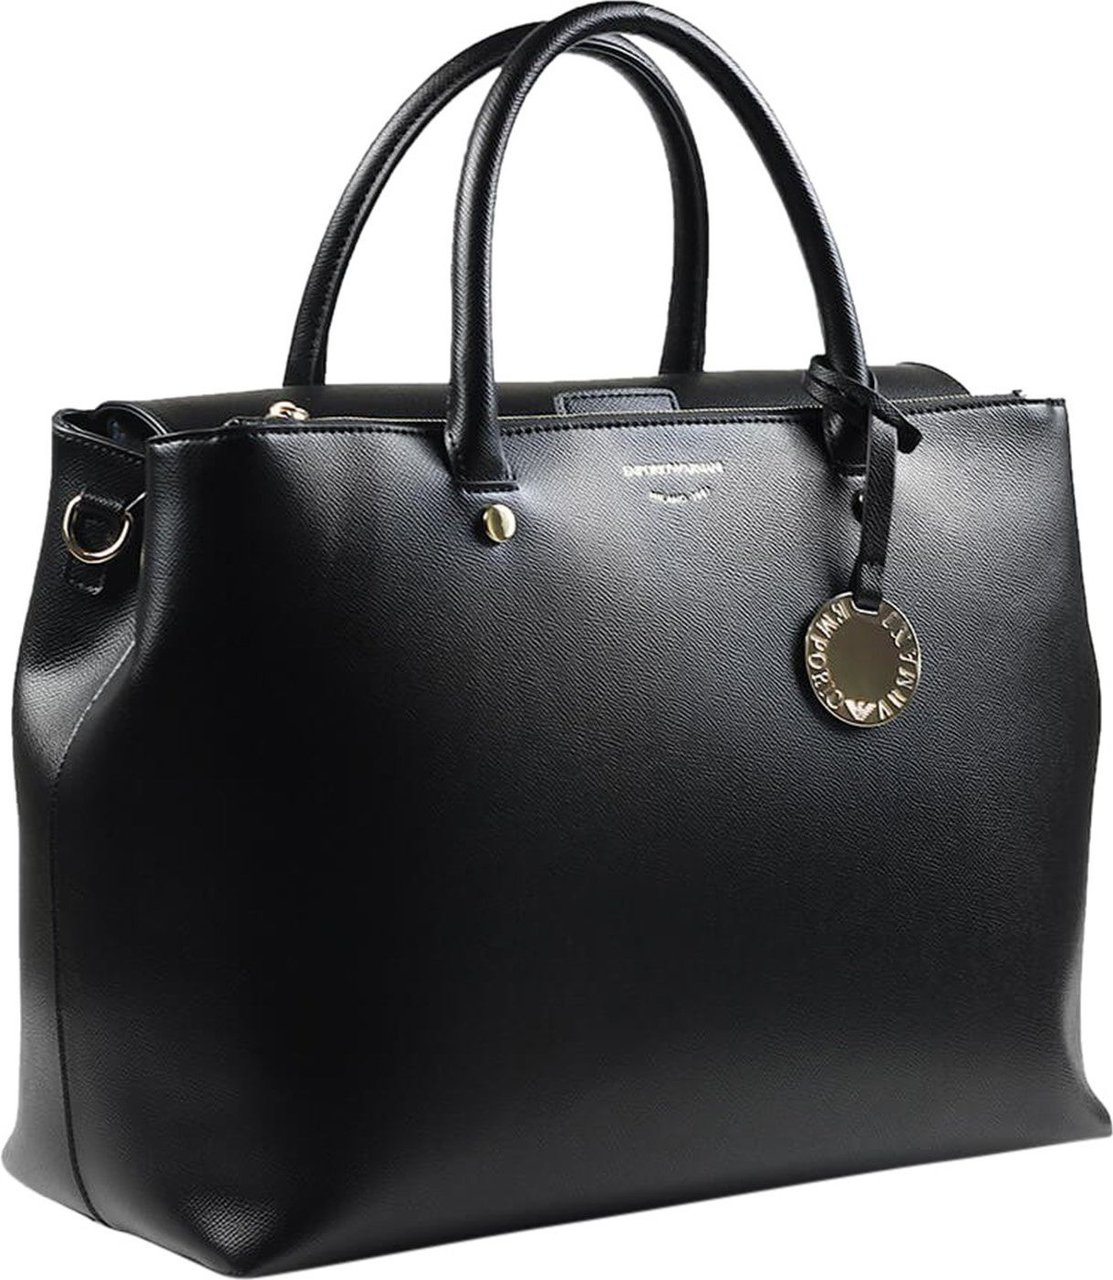 Emporio Armani Ea Milano Black Handbag Black Zwart